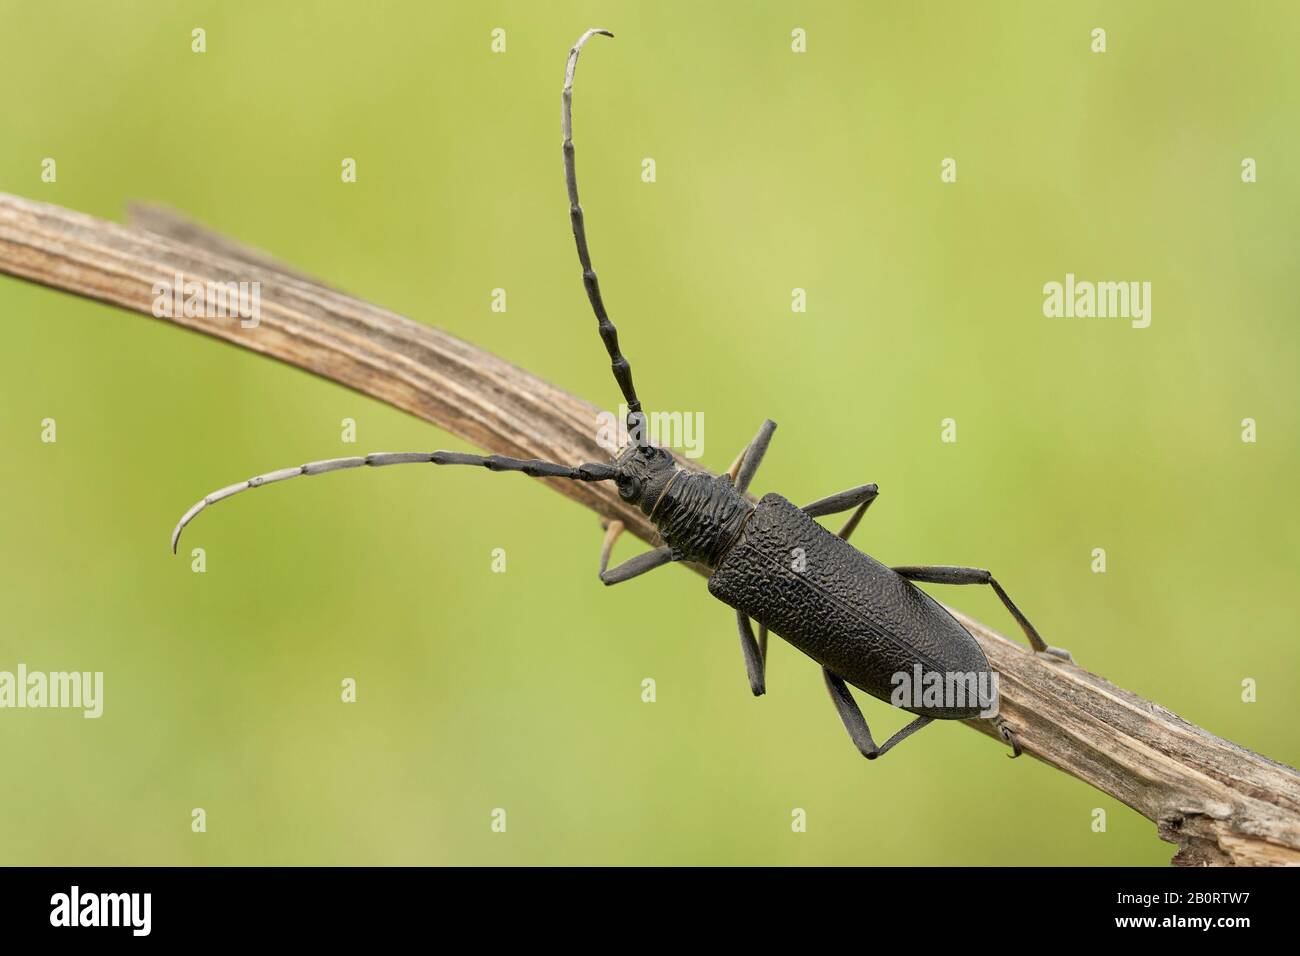 The capricorn beetle Cerambyx scopolii in Czech Republic Stock Photo